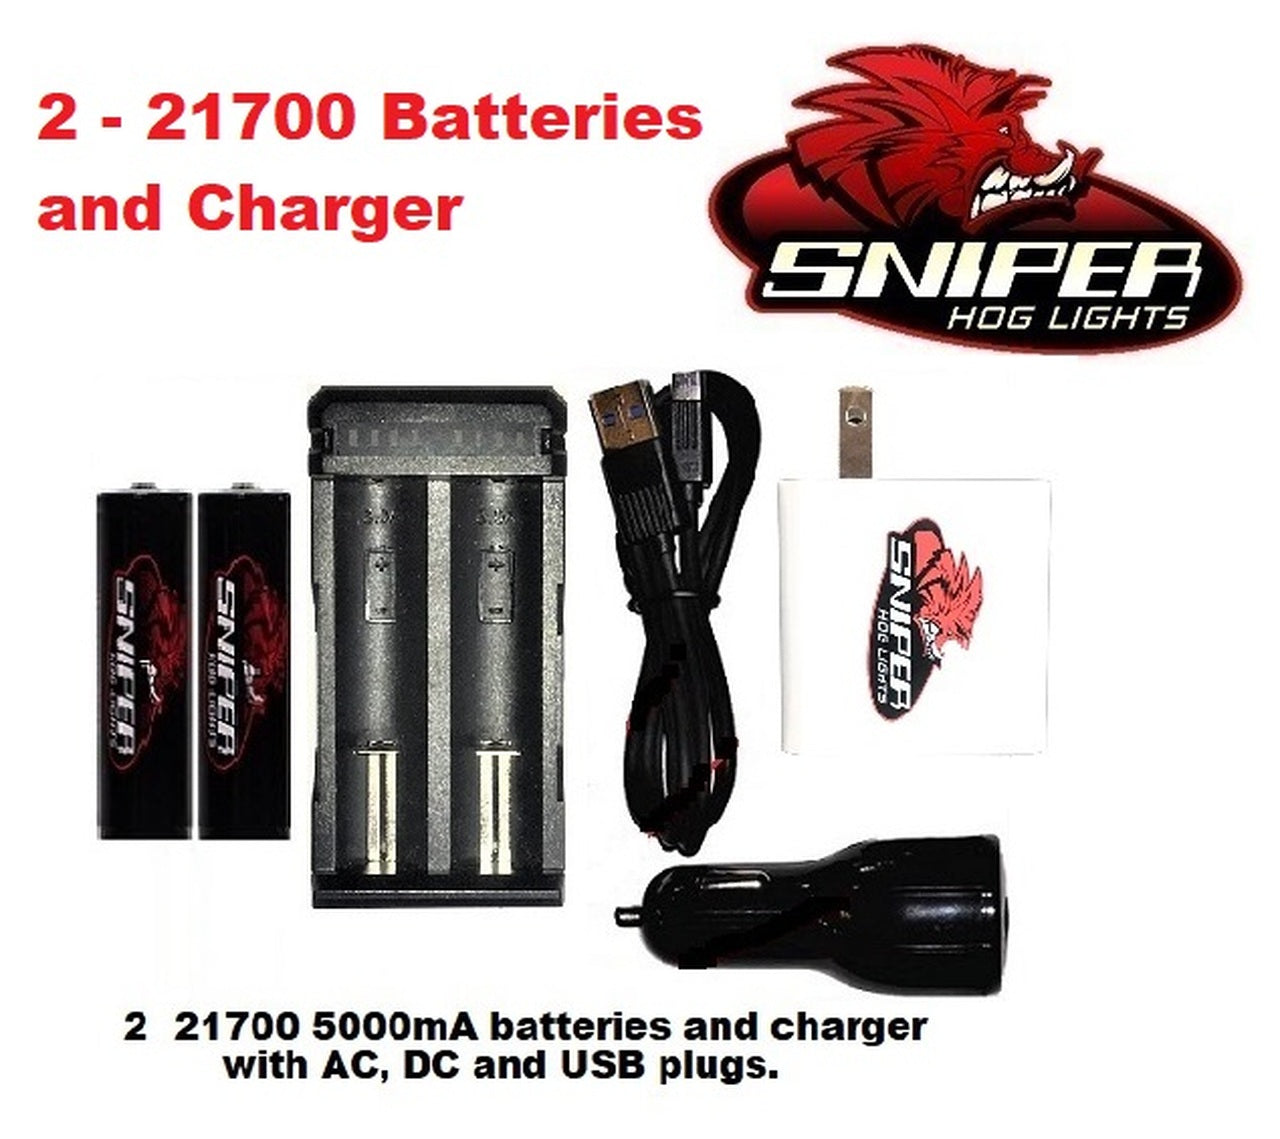 Sniper Hog Lights 21700 batteries and Charger